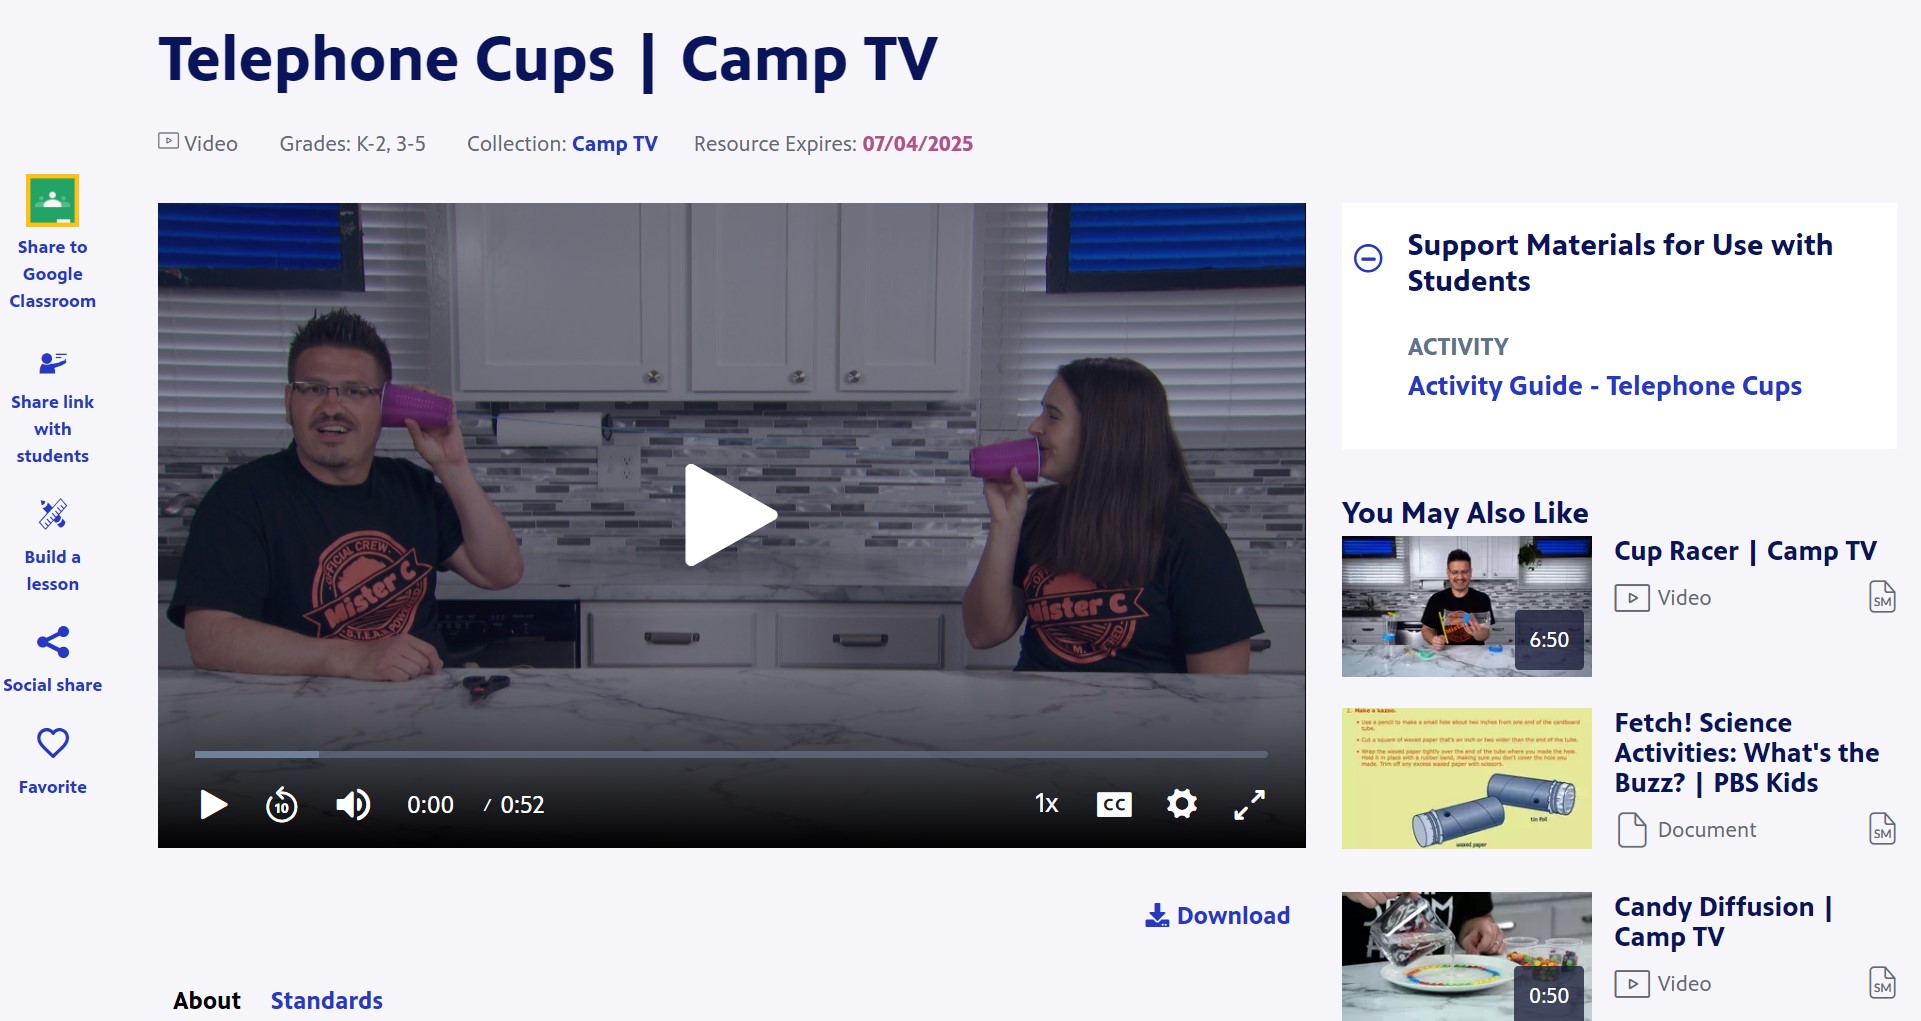 Telephone Cups | Camp TV